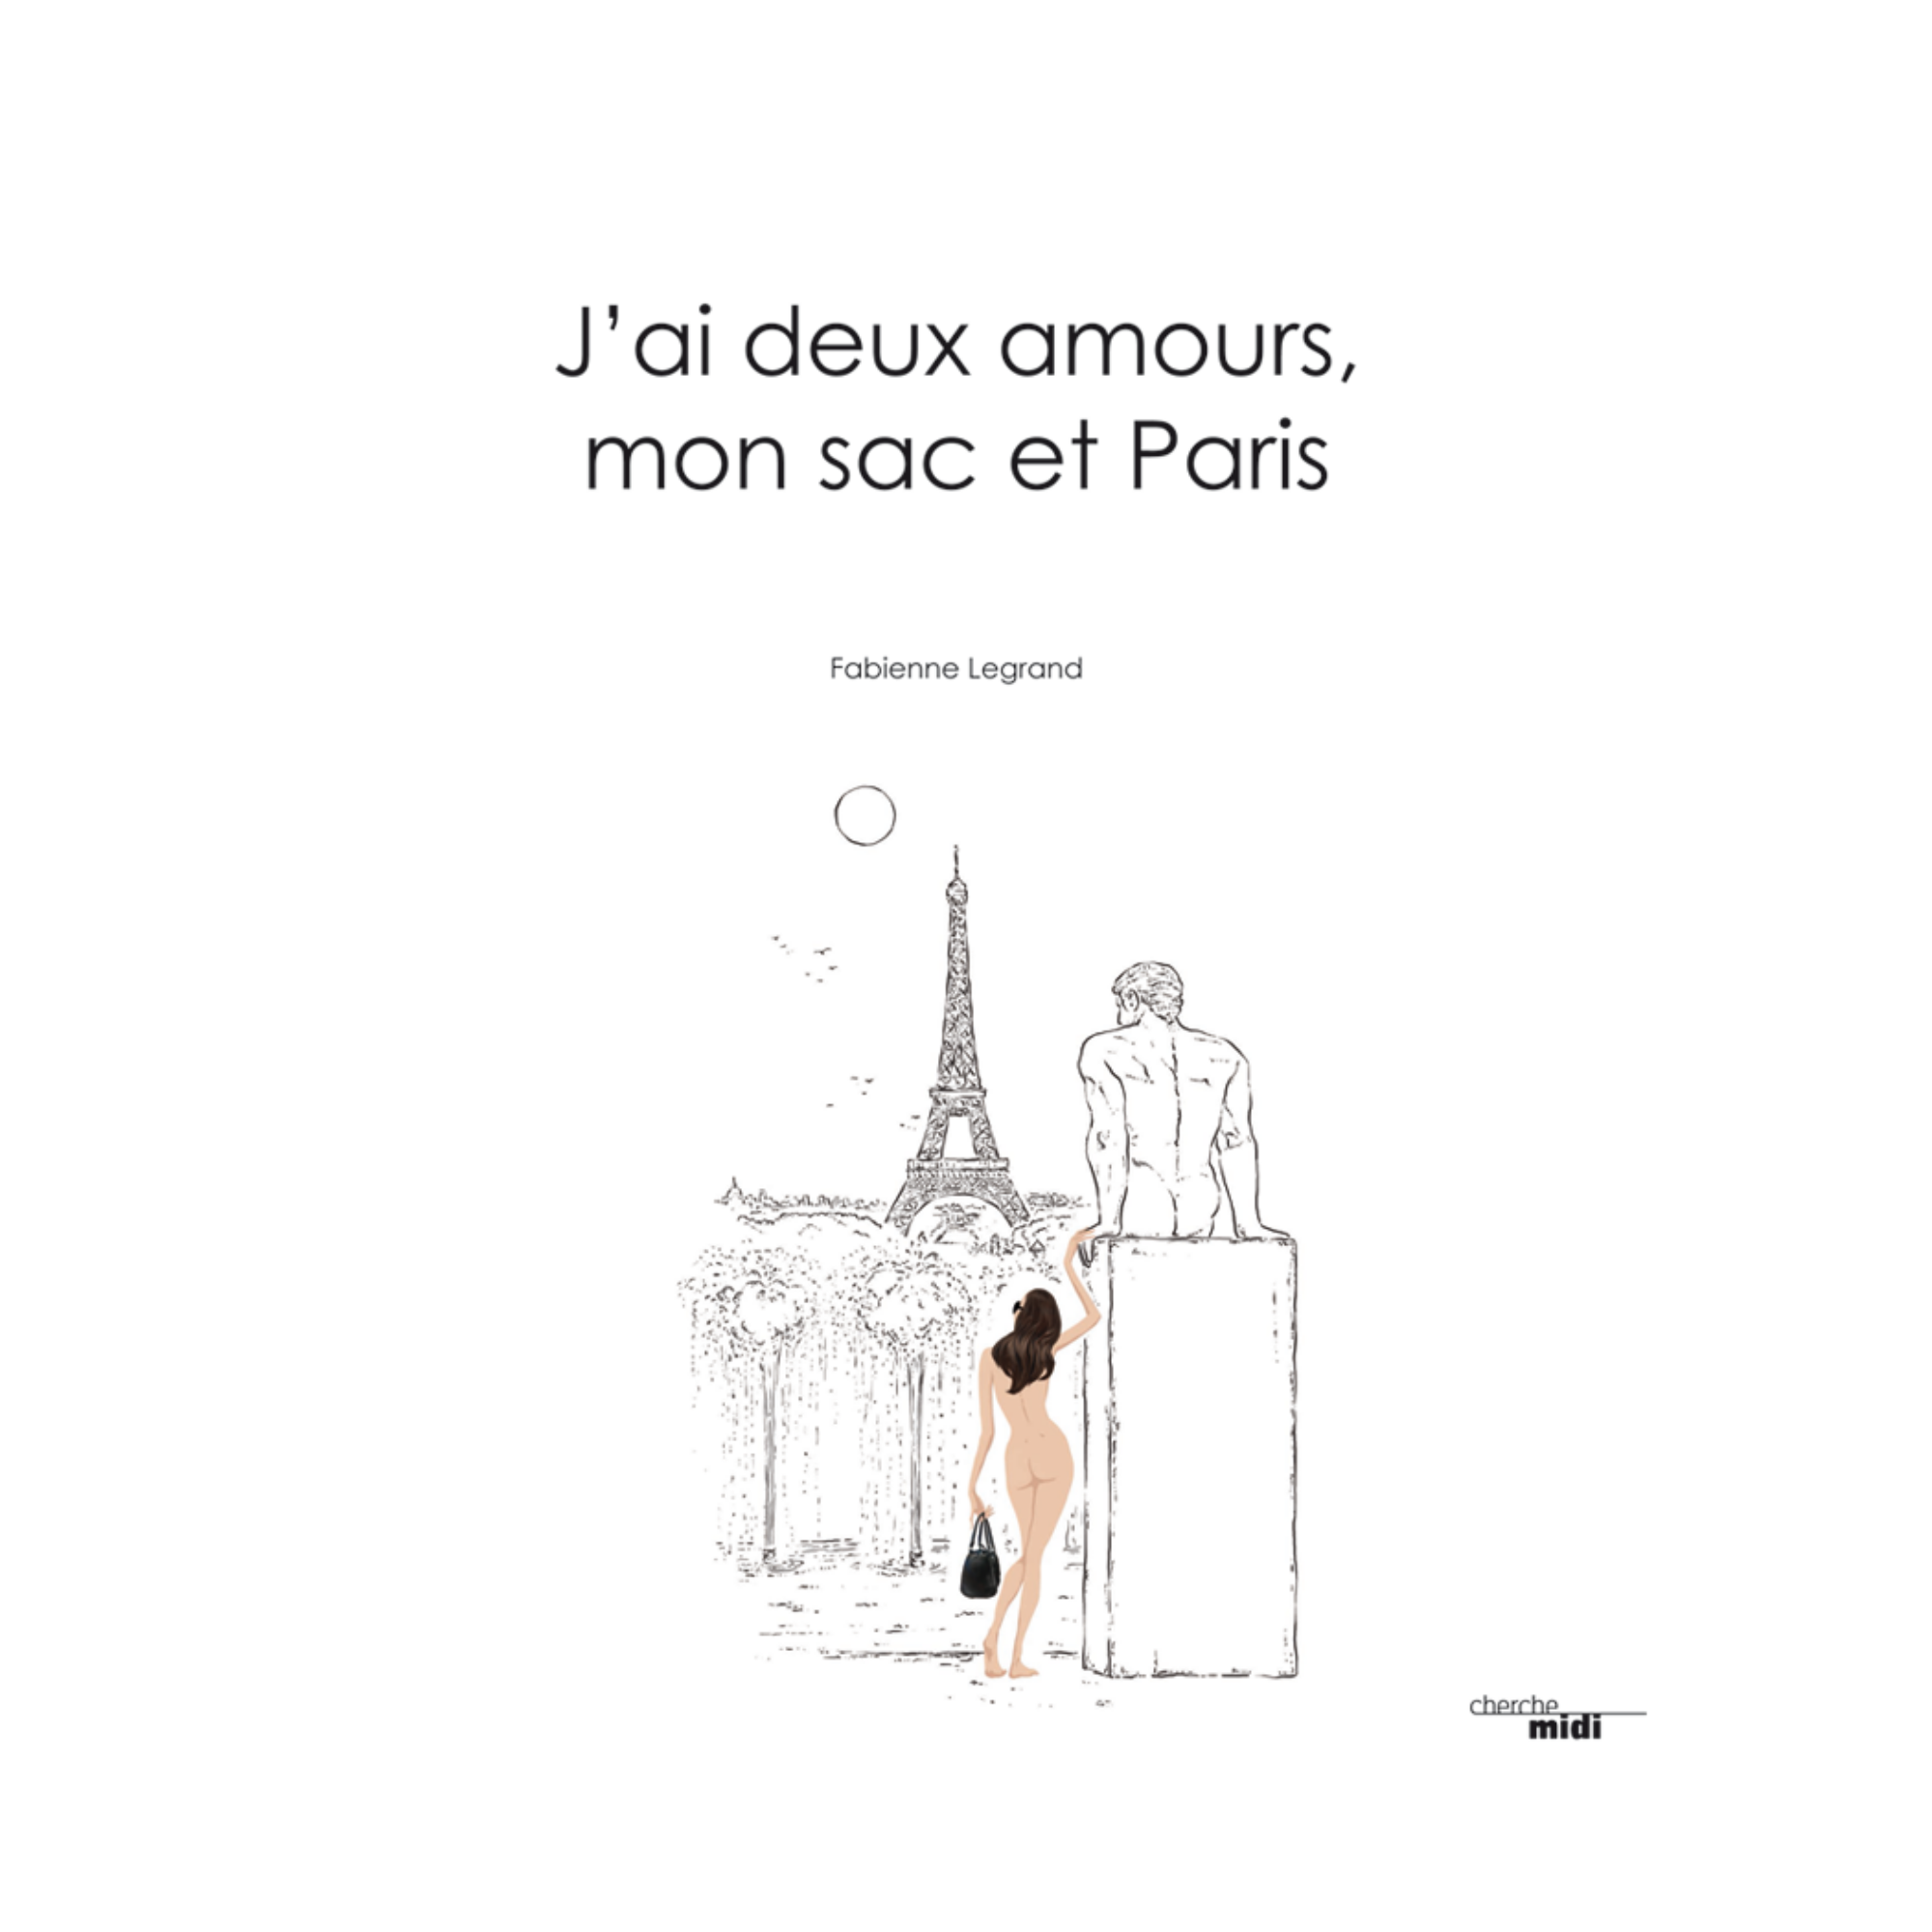 Other lines Book "Mon sac et Paris", French, Miscellaneous